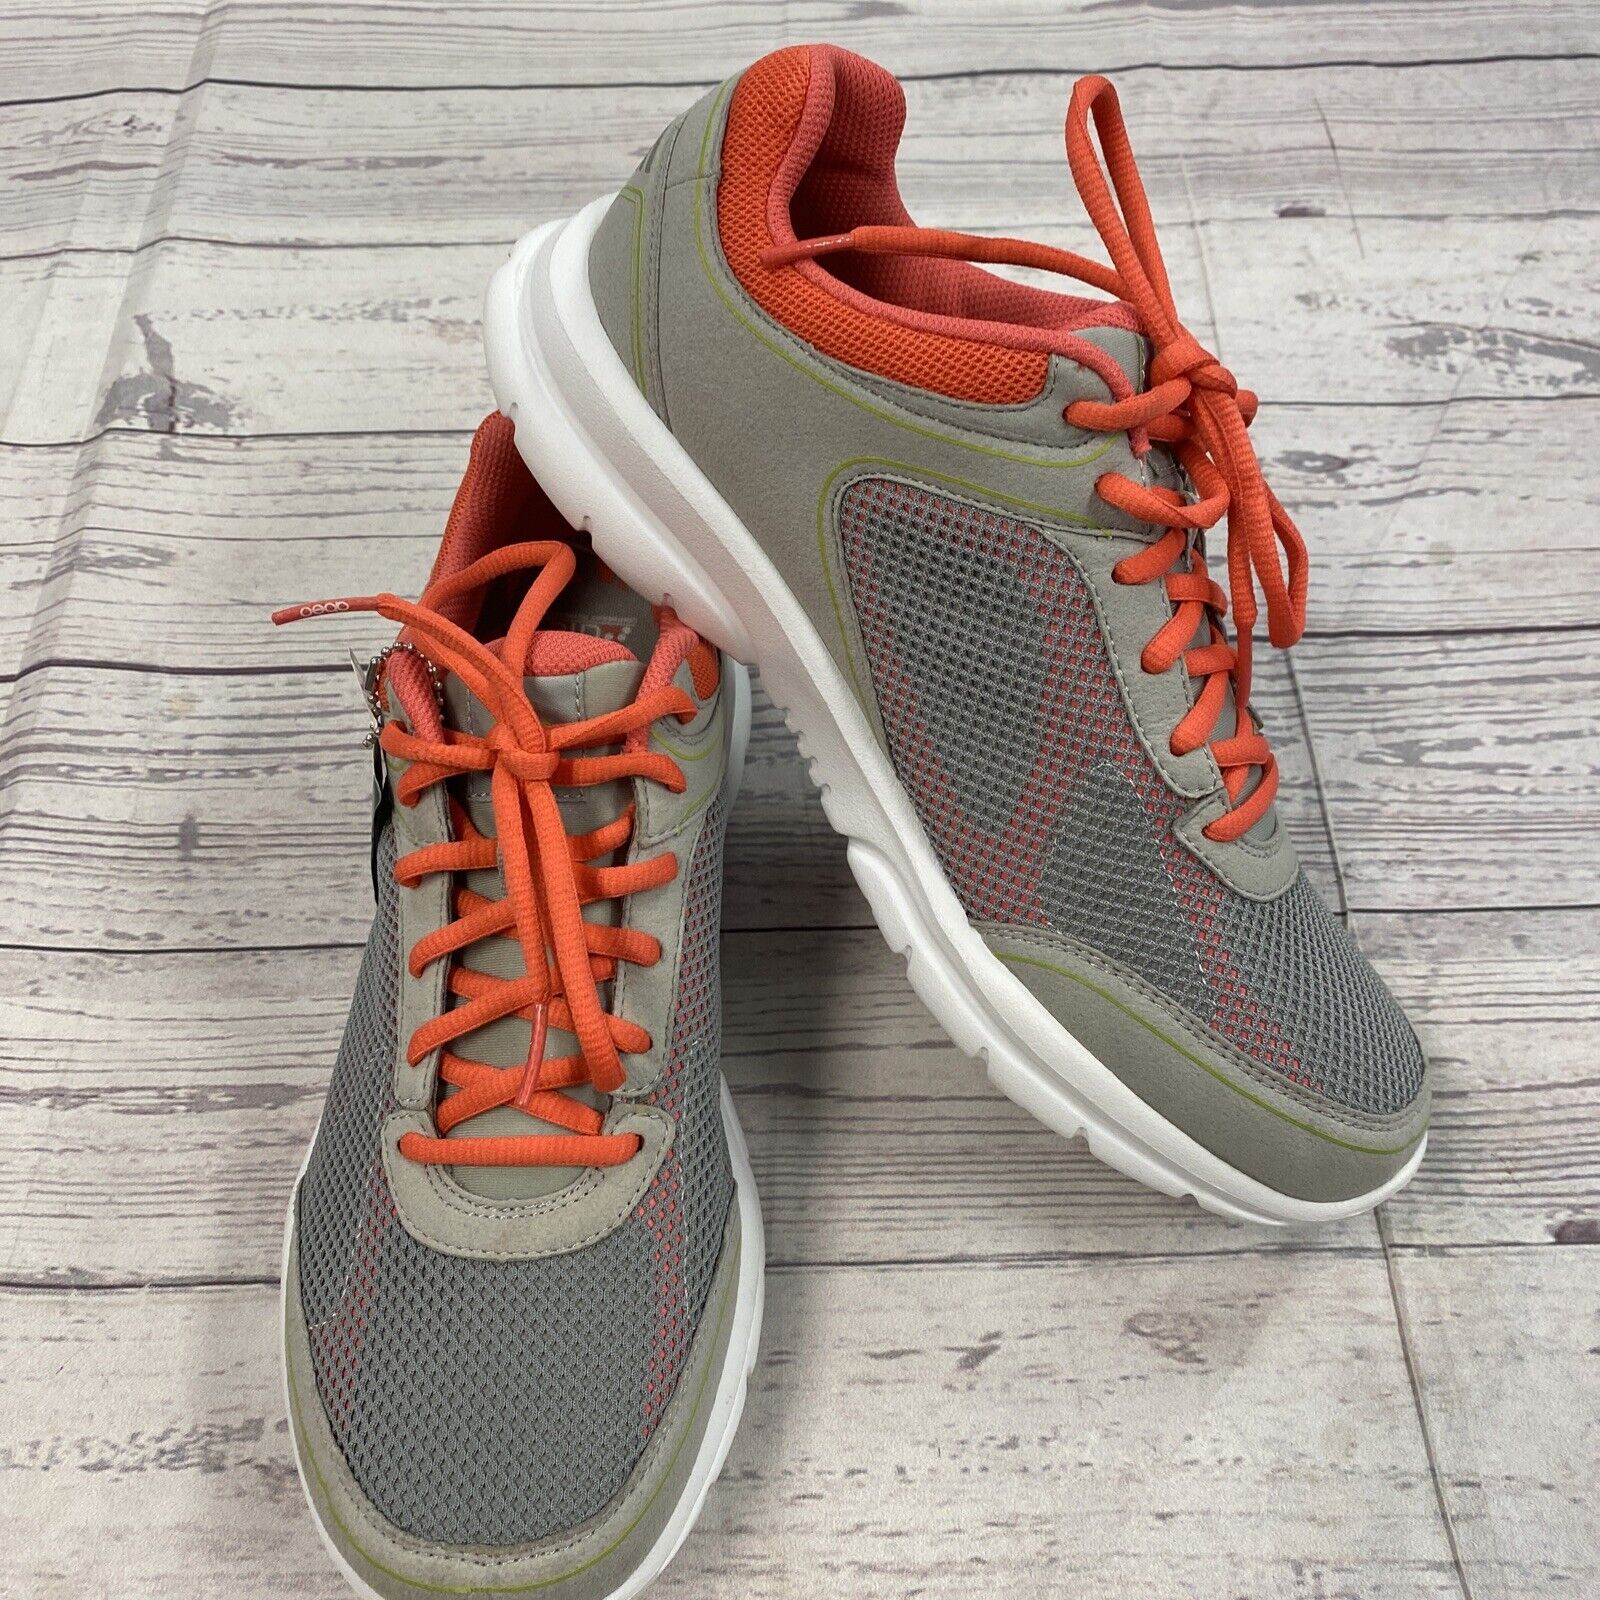 ABEO Swift Walking Shoes Sneakers Comfort Gray/Melon Women’s Size 10 New*